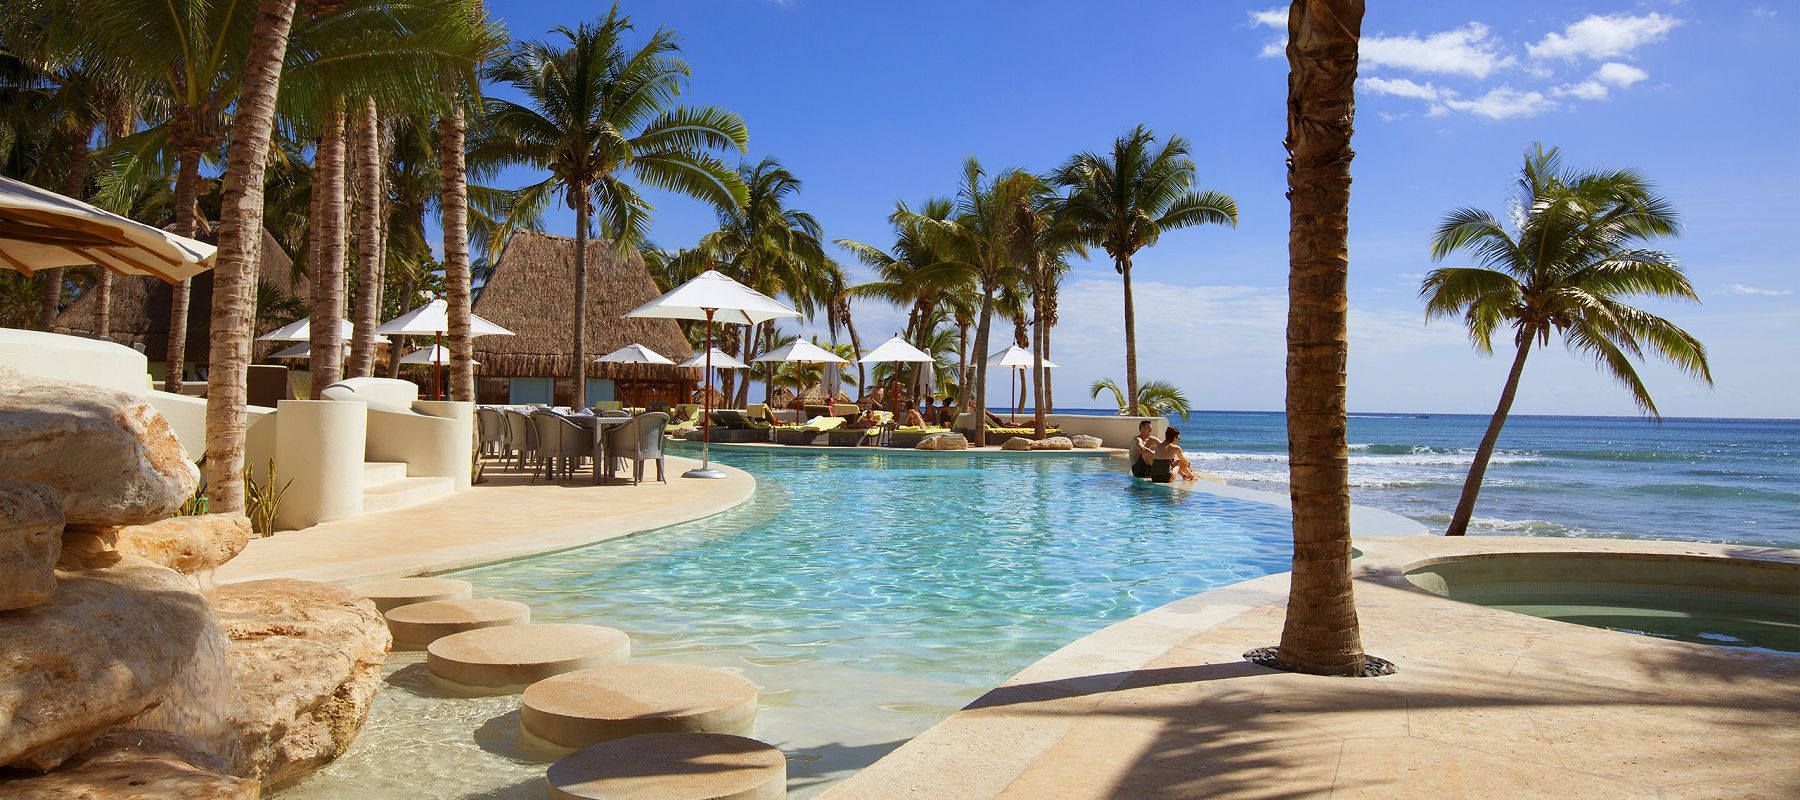 Resort-style infinity pool overlooking the Caribbean at Mahekal Beach Resort